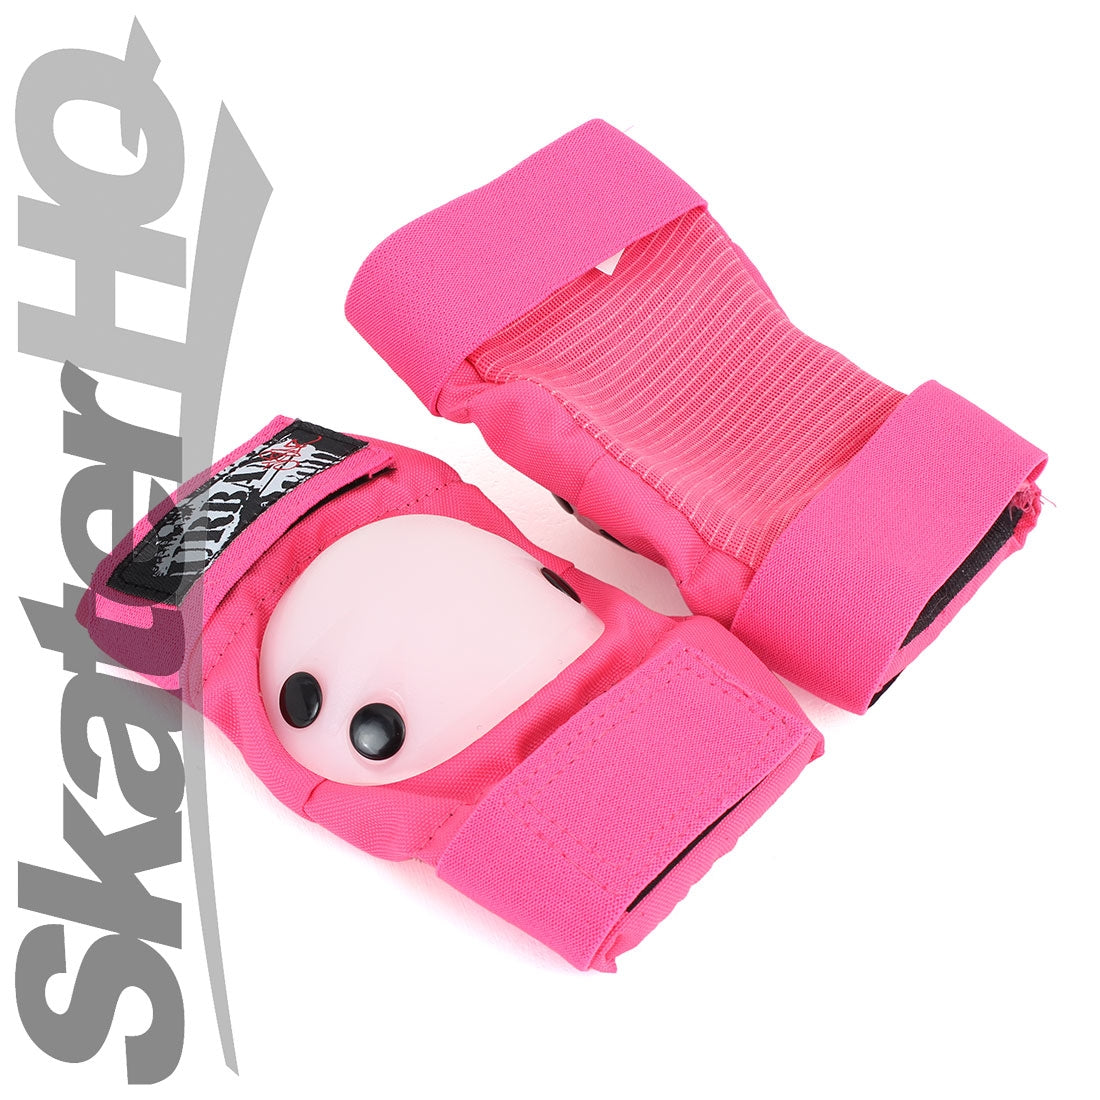 Urban Skater Tri Pack Pink - Junior Protective Gear